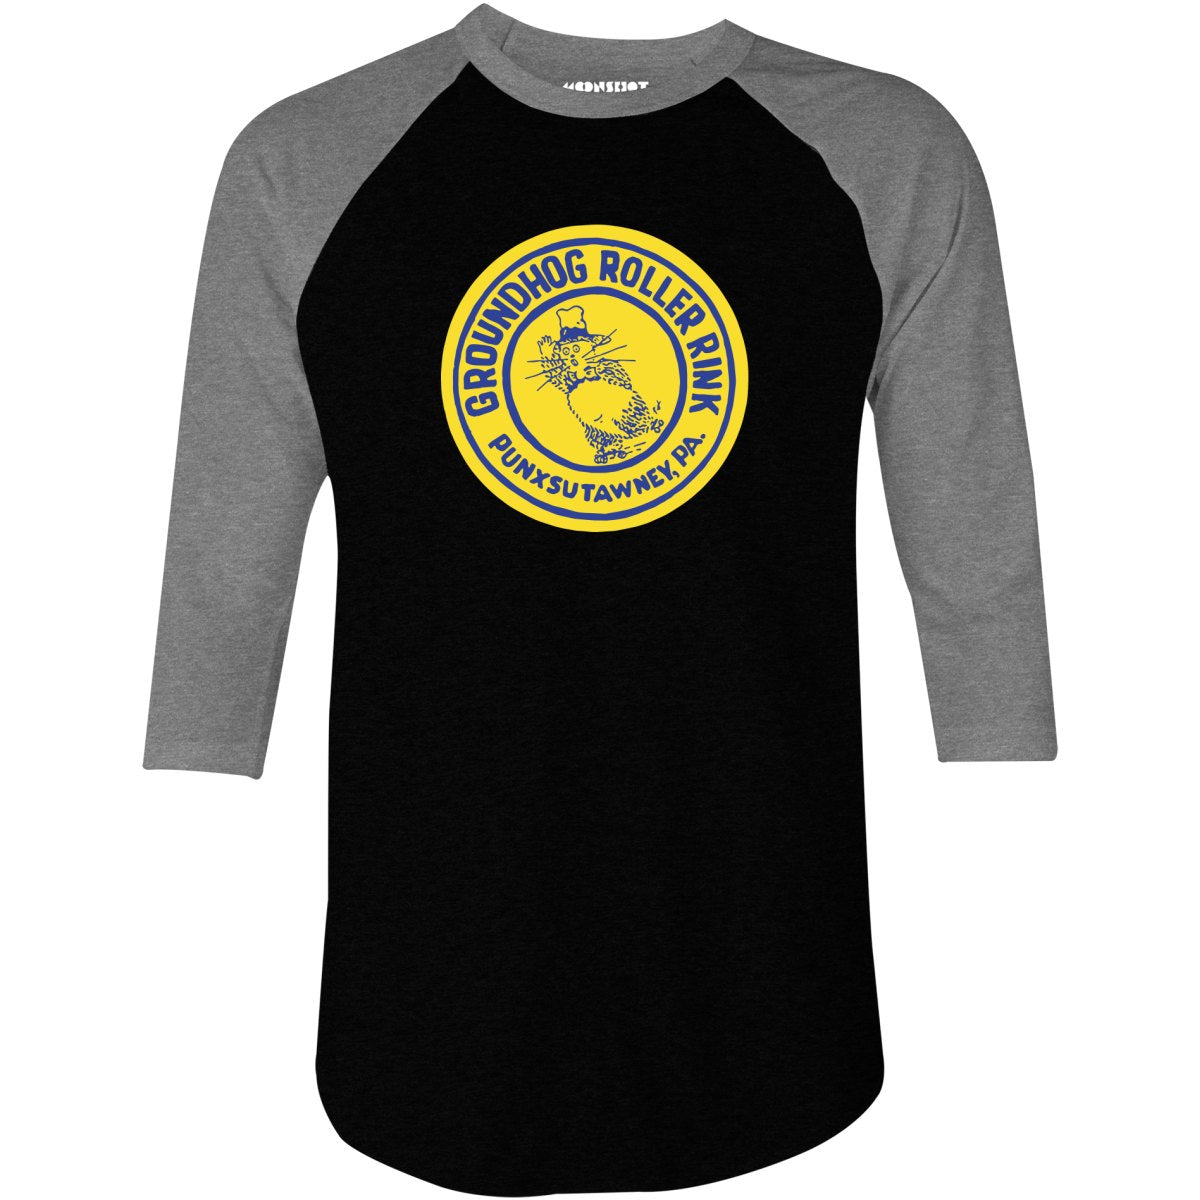 Groundhog Roller Rink - Punxsutawney, PA - Vintage Roller Rink - 3/4 Sleeve Raglan T-Shirt